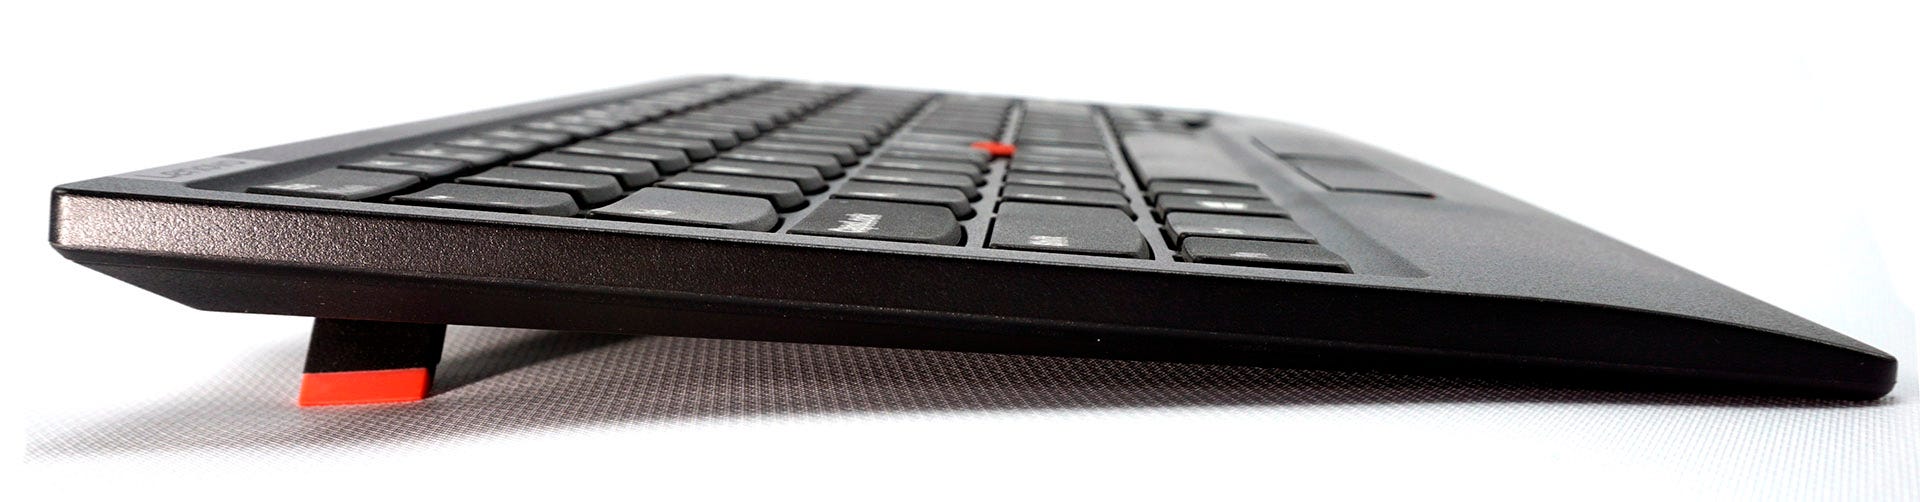 Keyboard ThinkPad dari sisi kiri 